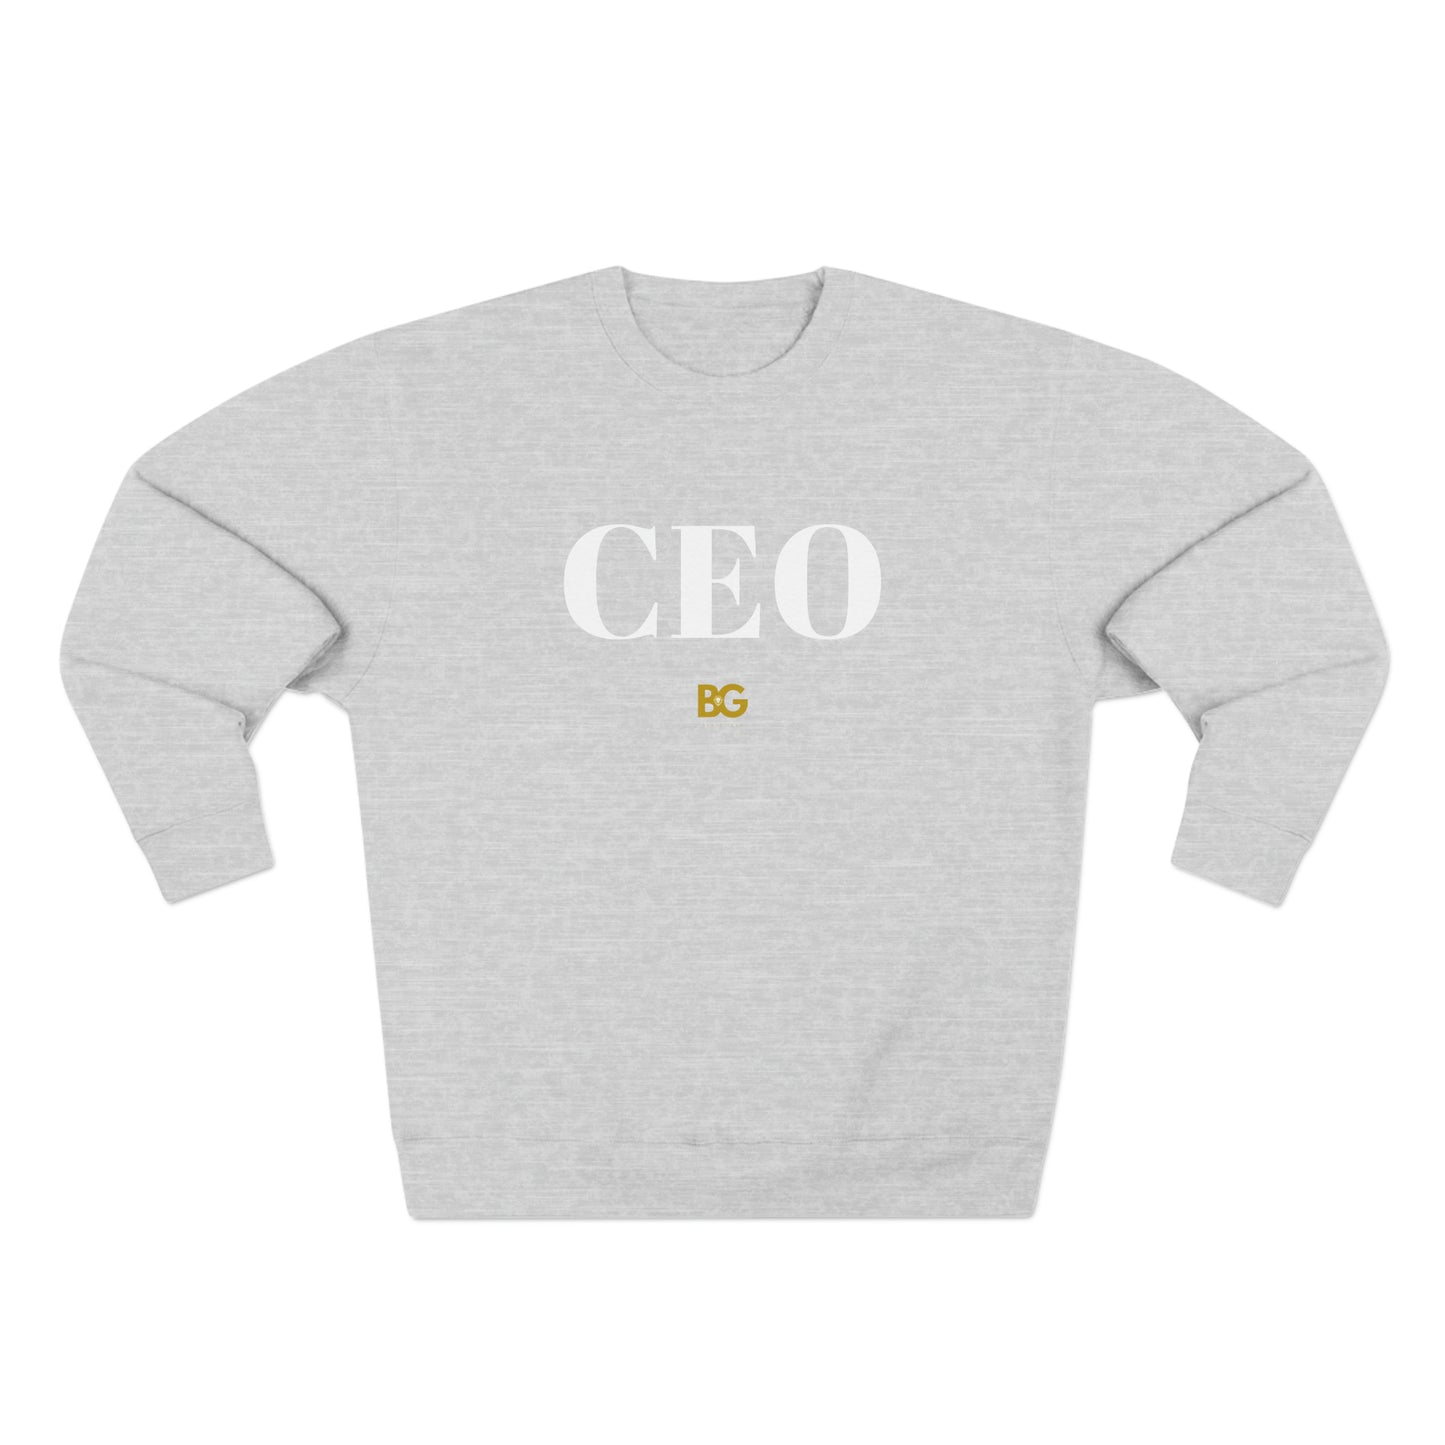 BG "CEO" Premium Crewneck Sweatshirt